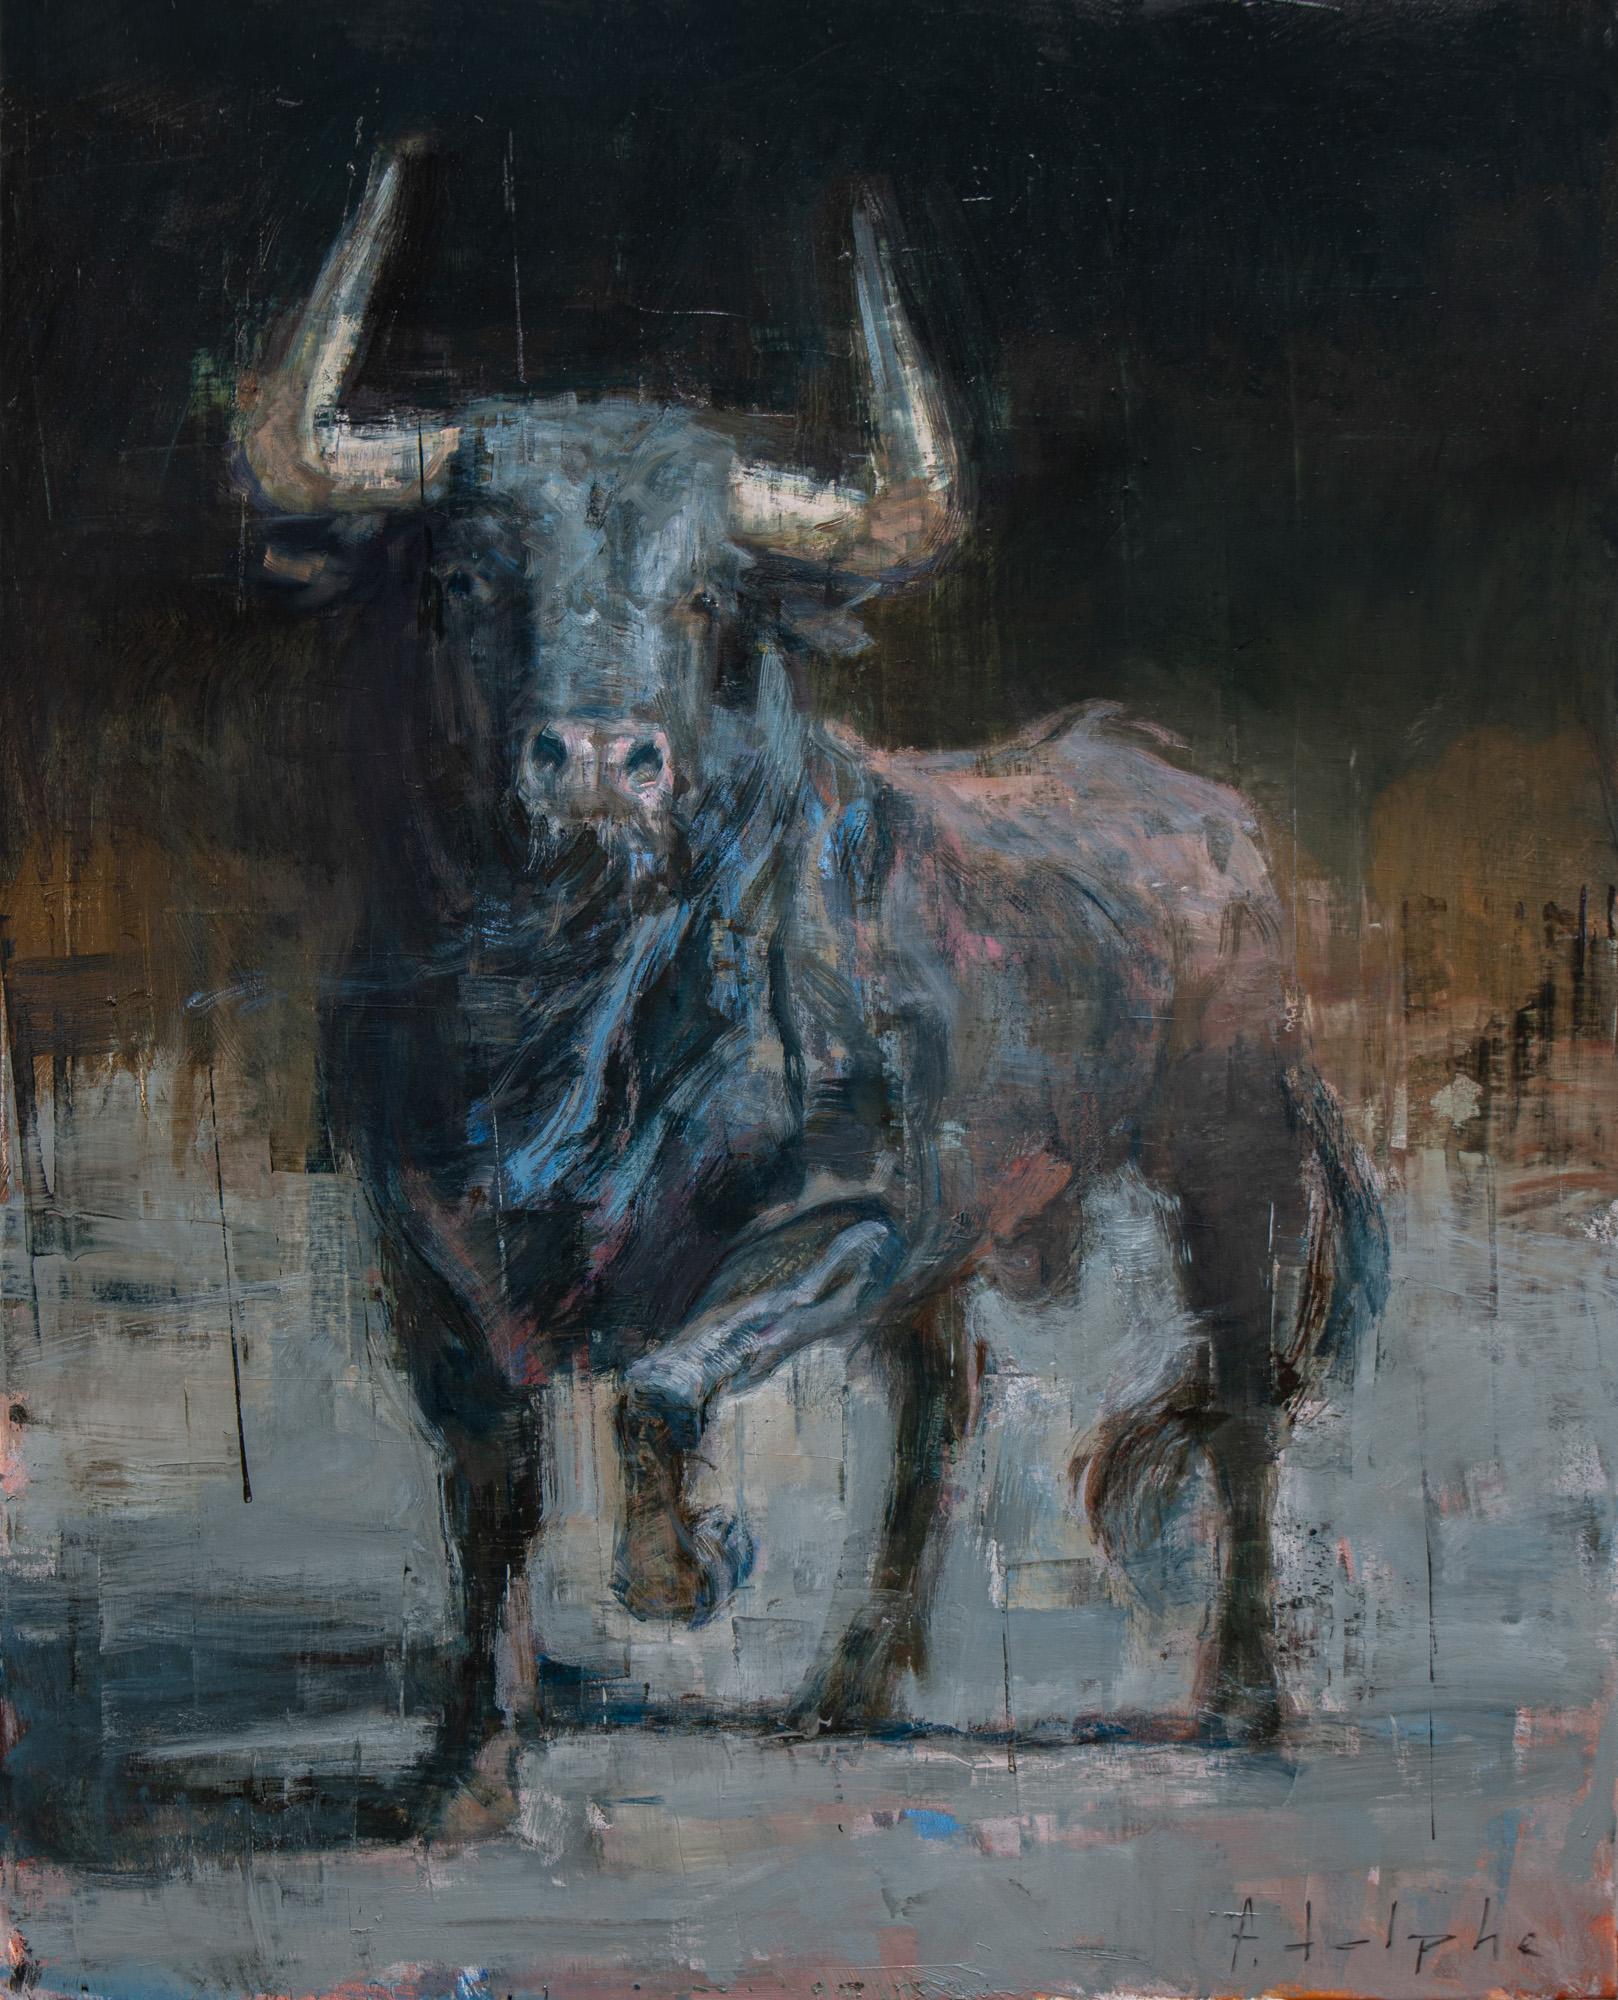 Joseph Adolphe Animal Painting - "Toro Bravo No. 83" Contemporary Abstract Bull Oil on Canvas Painting